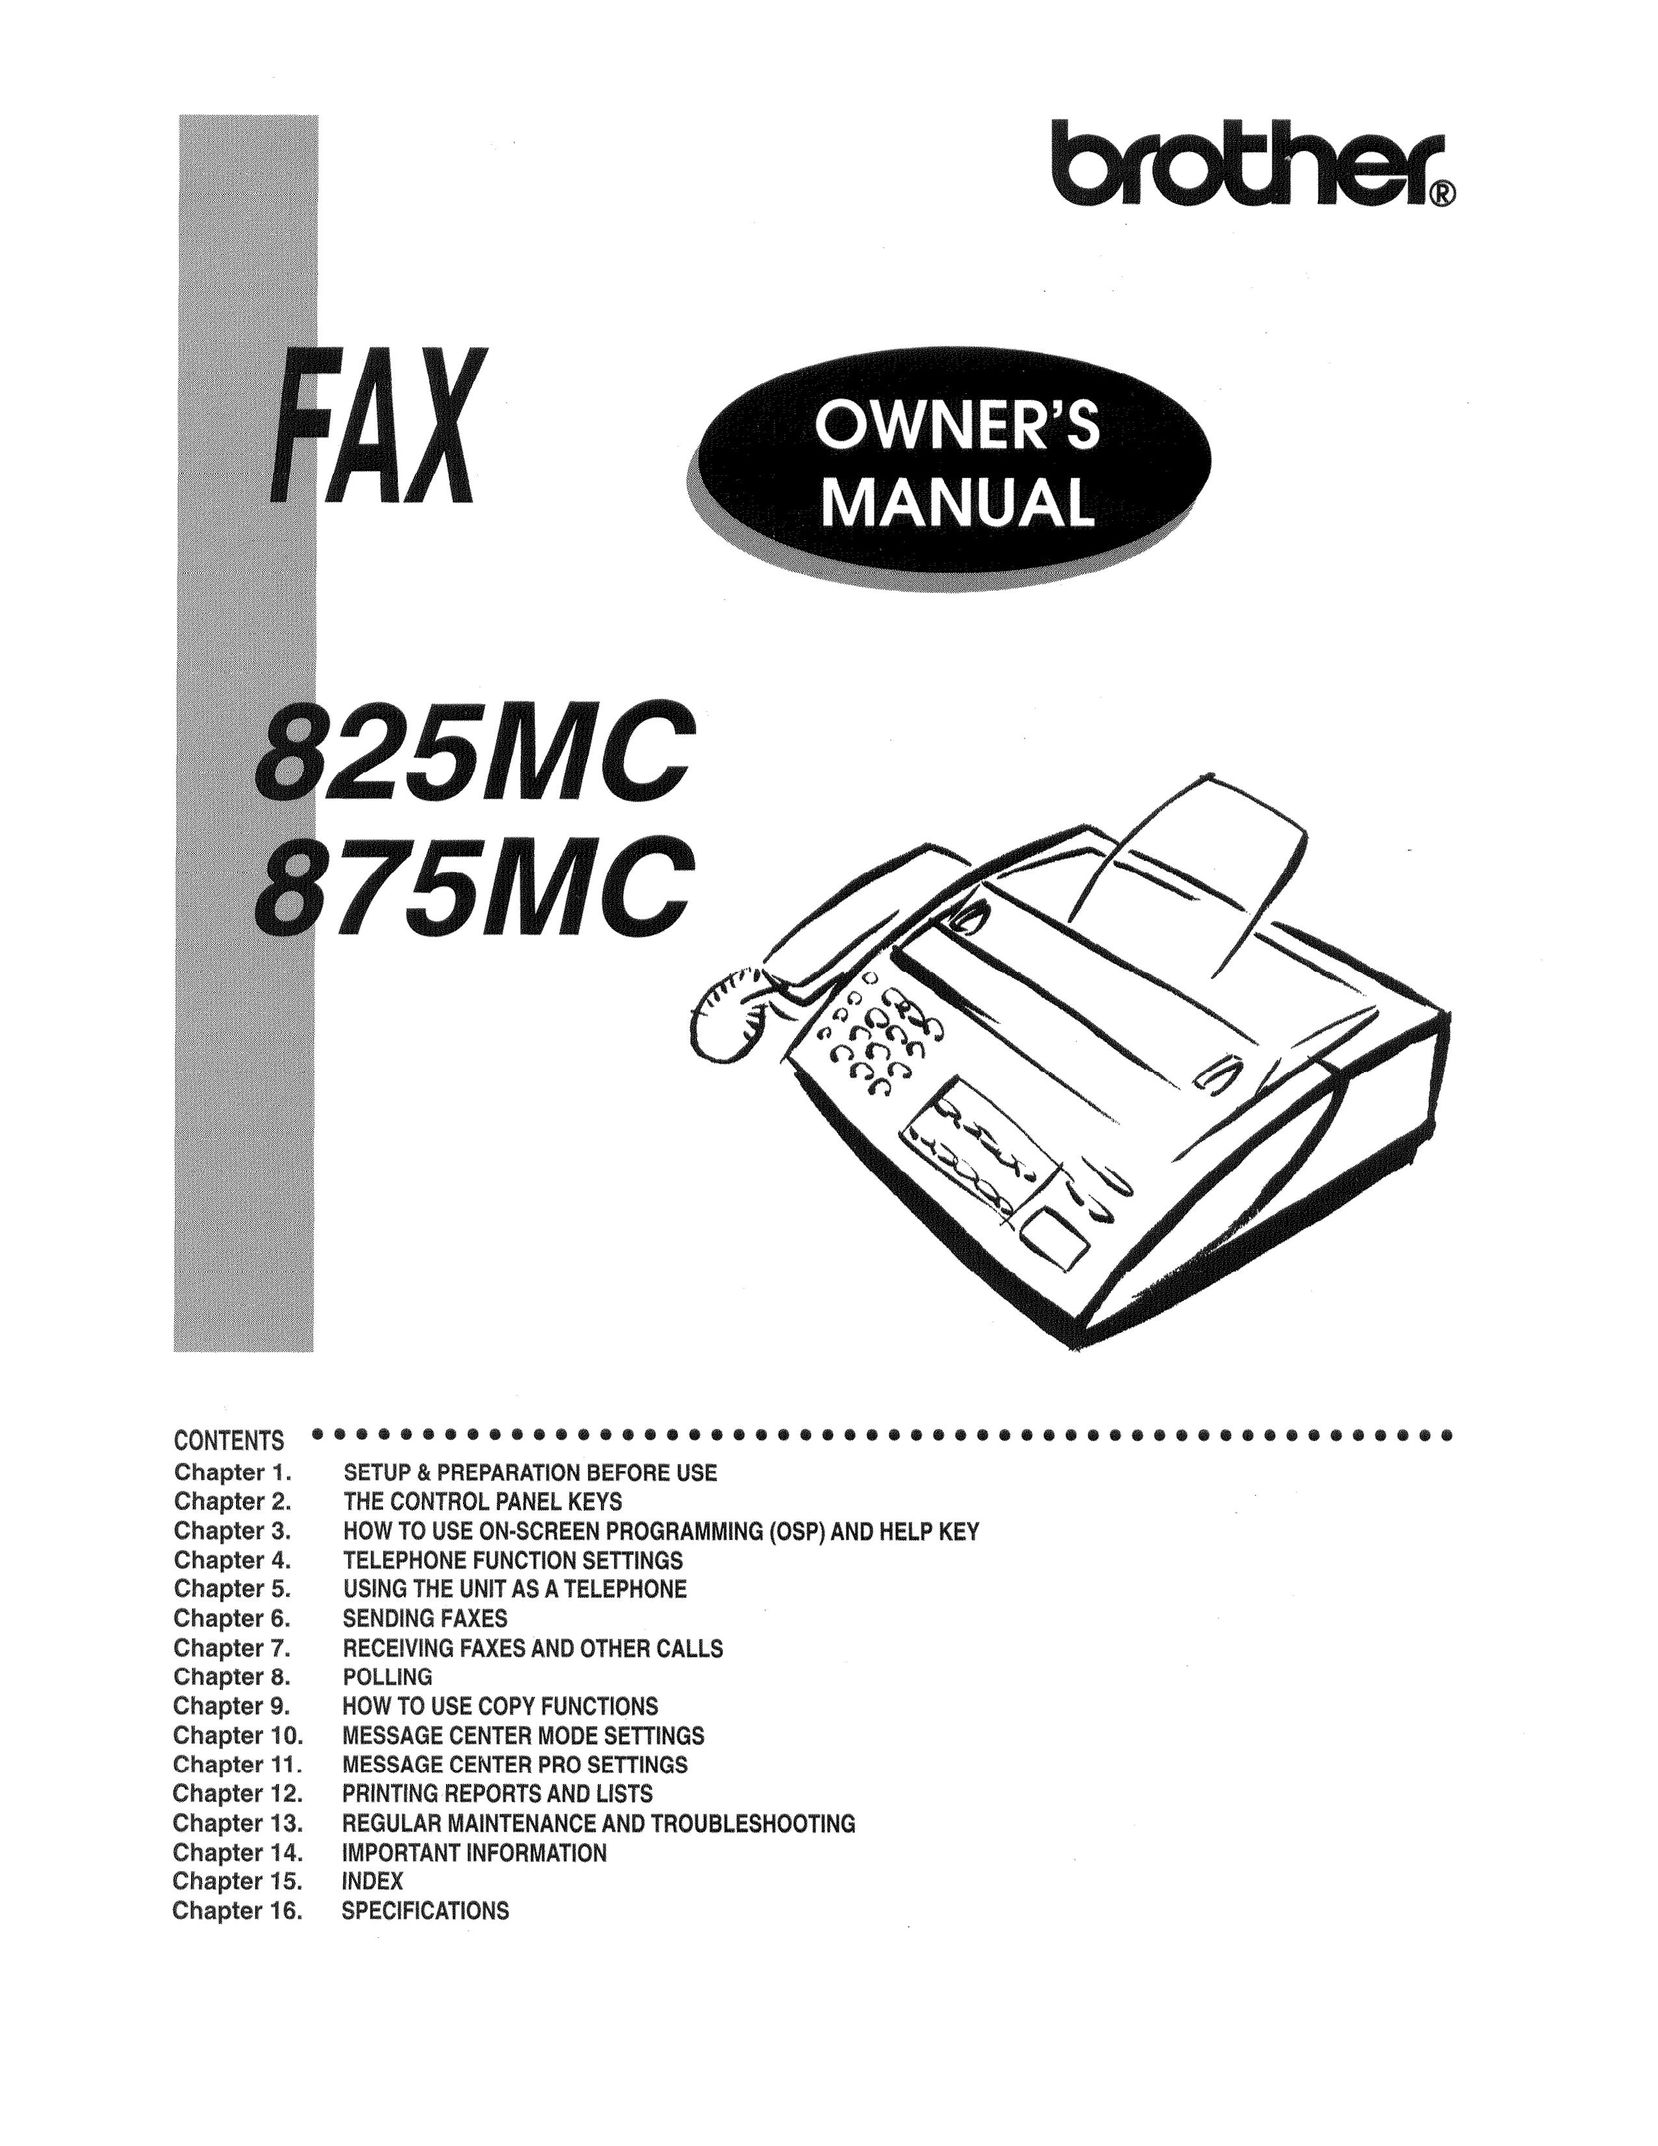 Brother 825MC Fax Machine User Manual